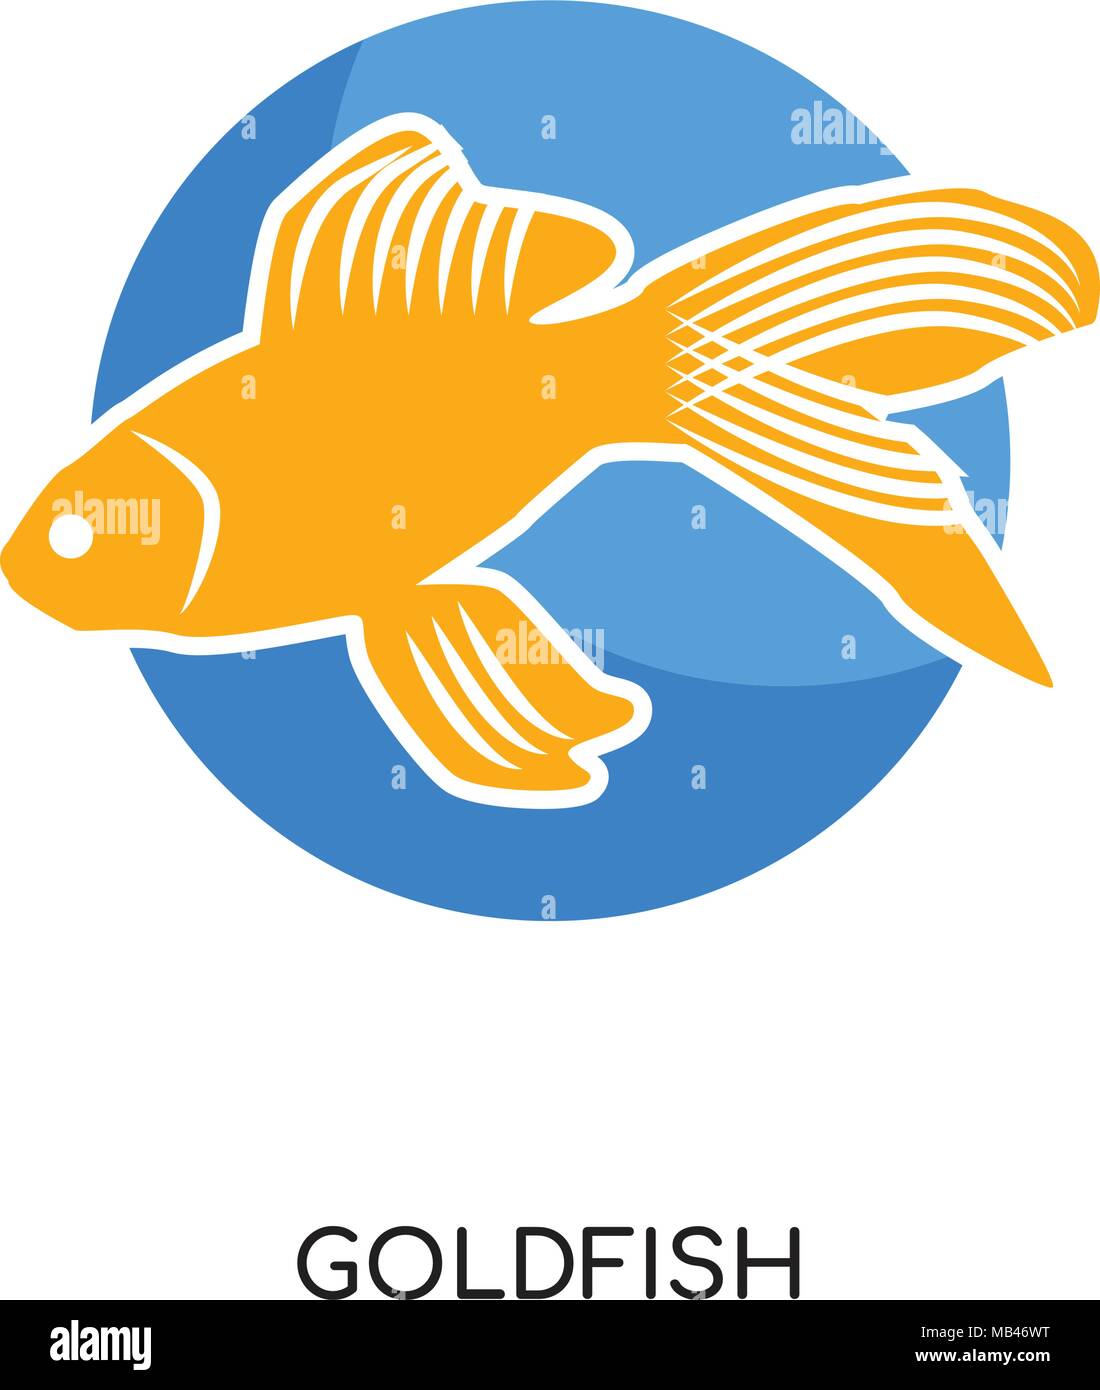 goldfish logo isolated on white background for your web, mobile